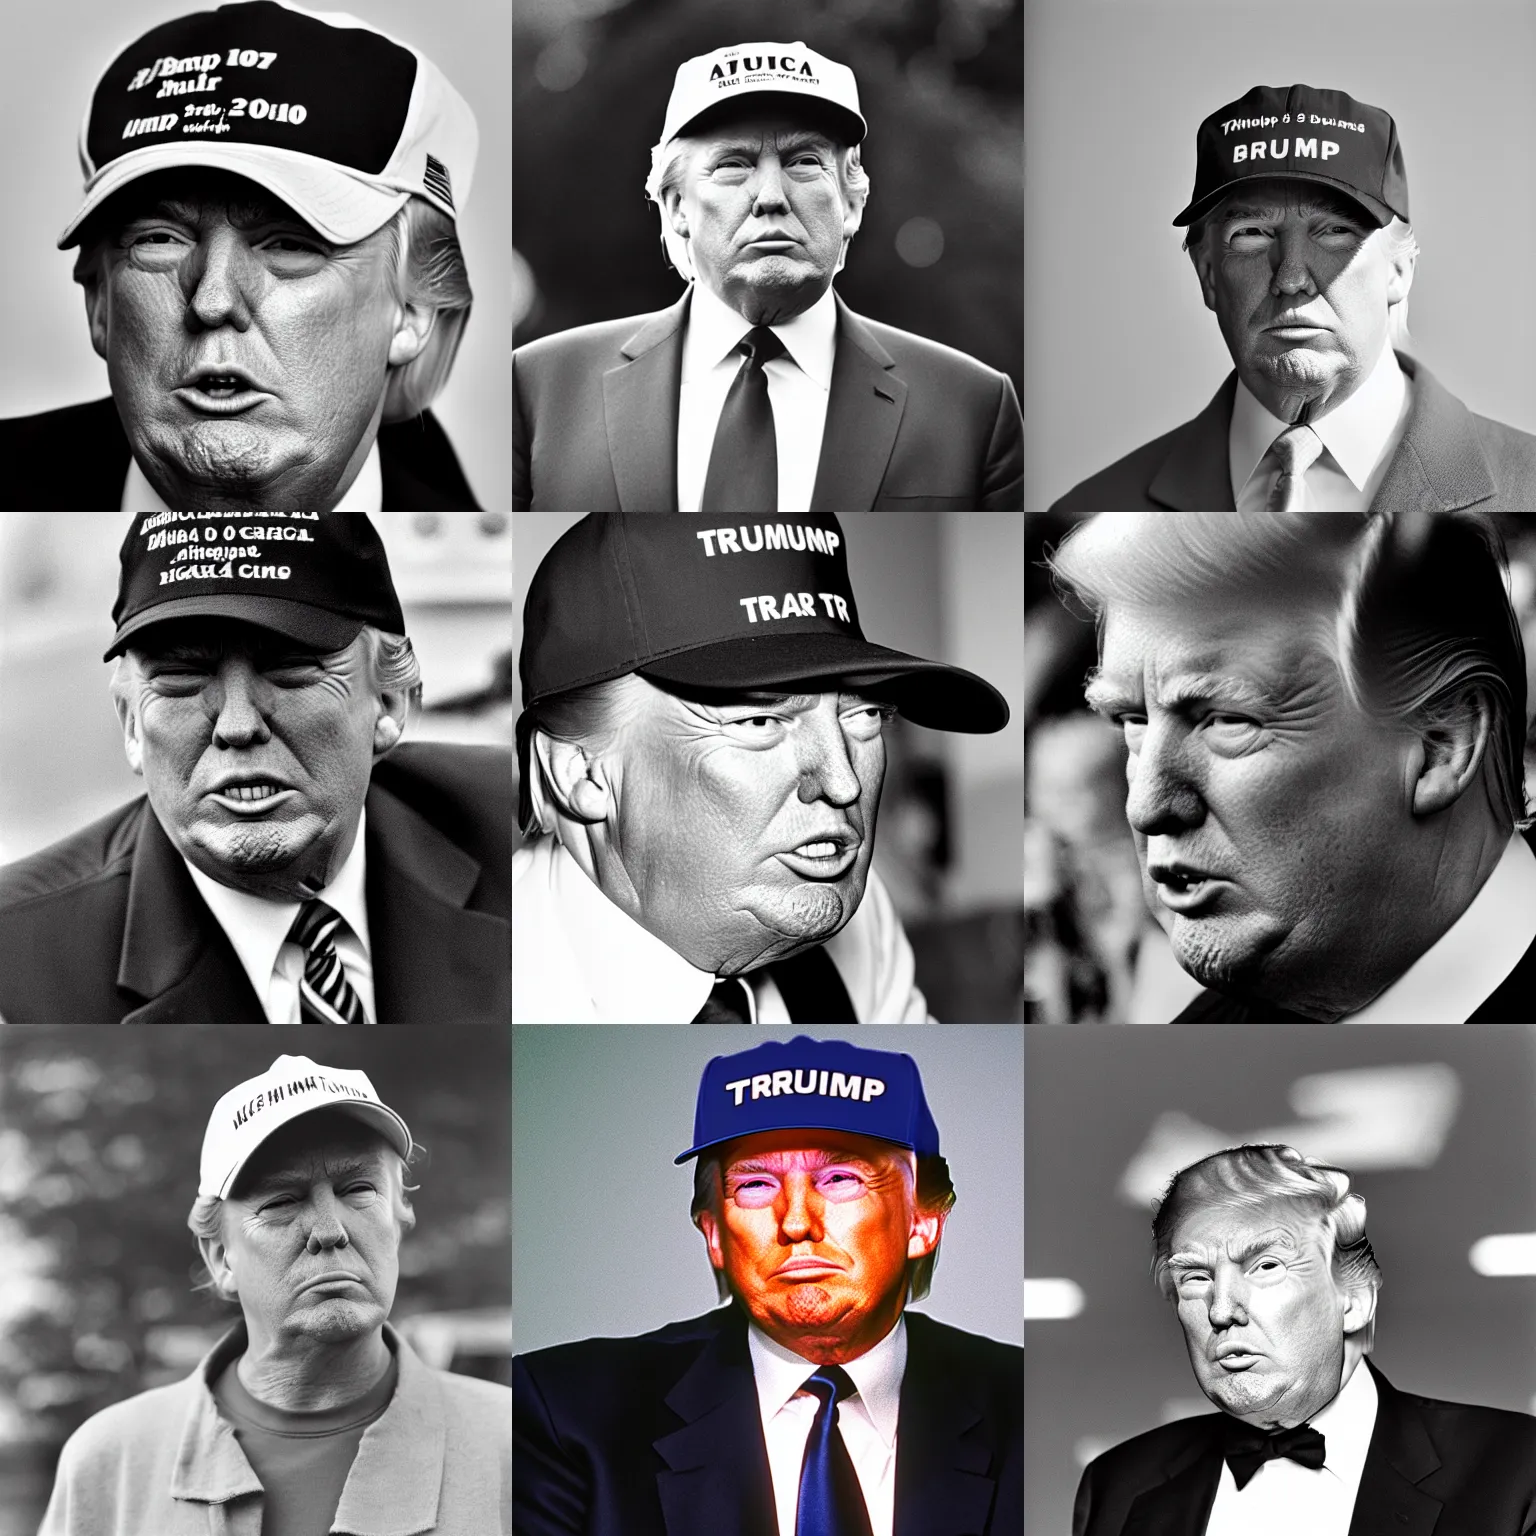 Prompt: Donald Trump with a backwards cap, 35mm photograph